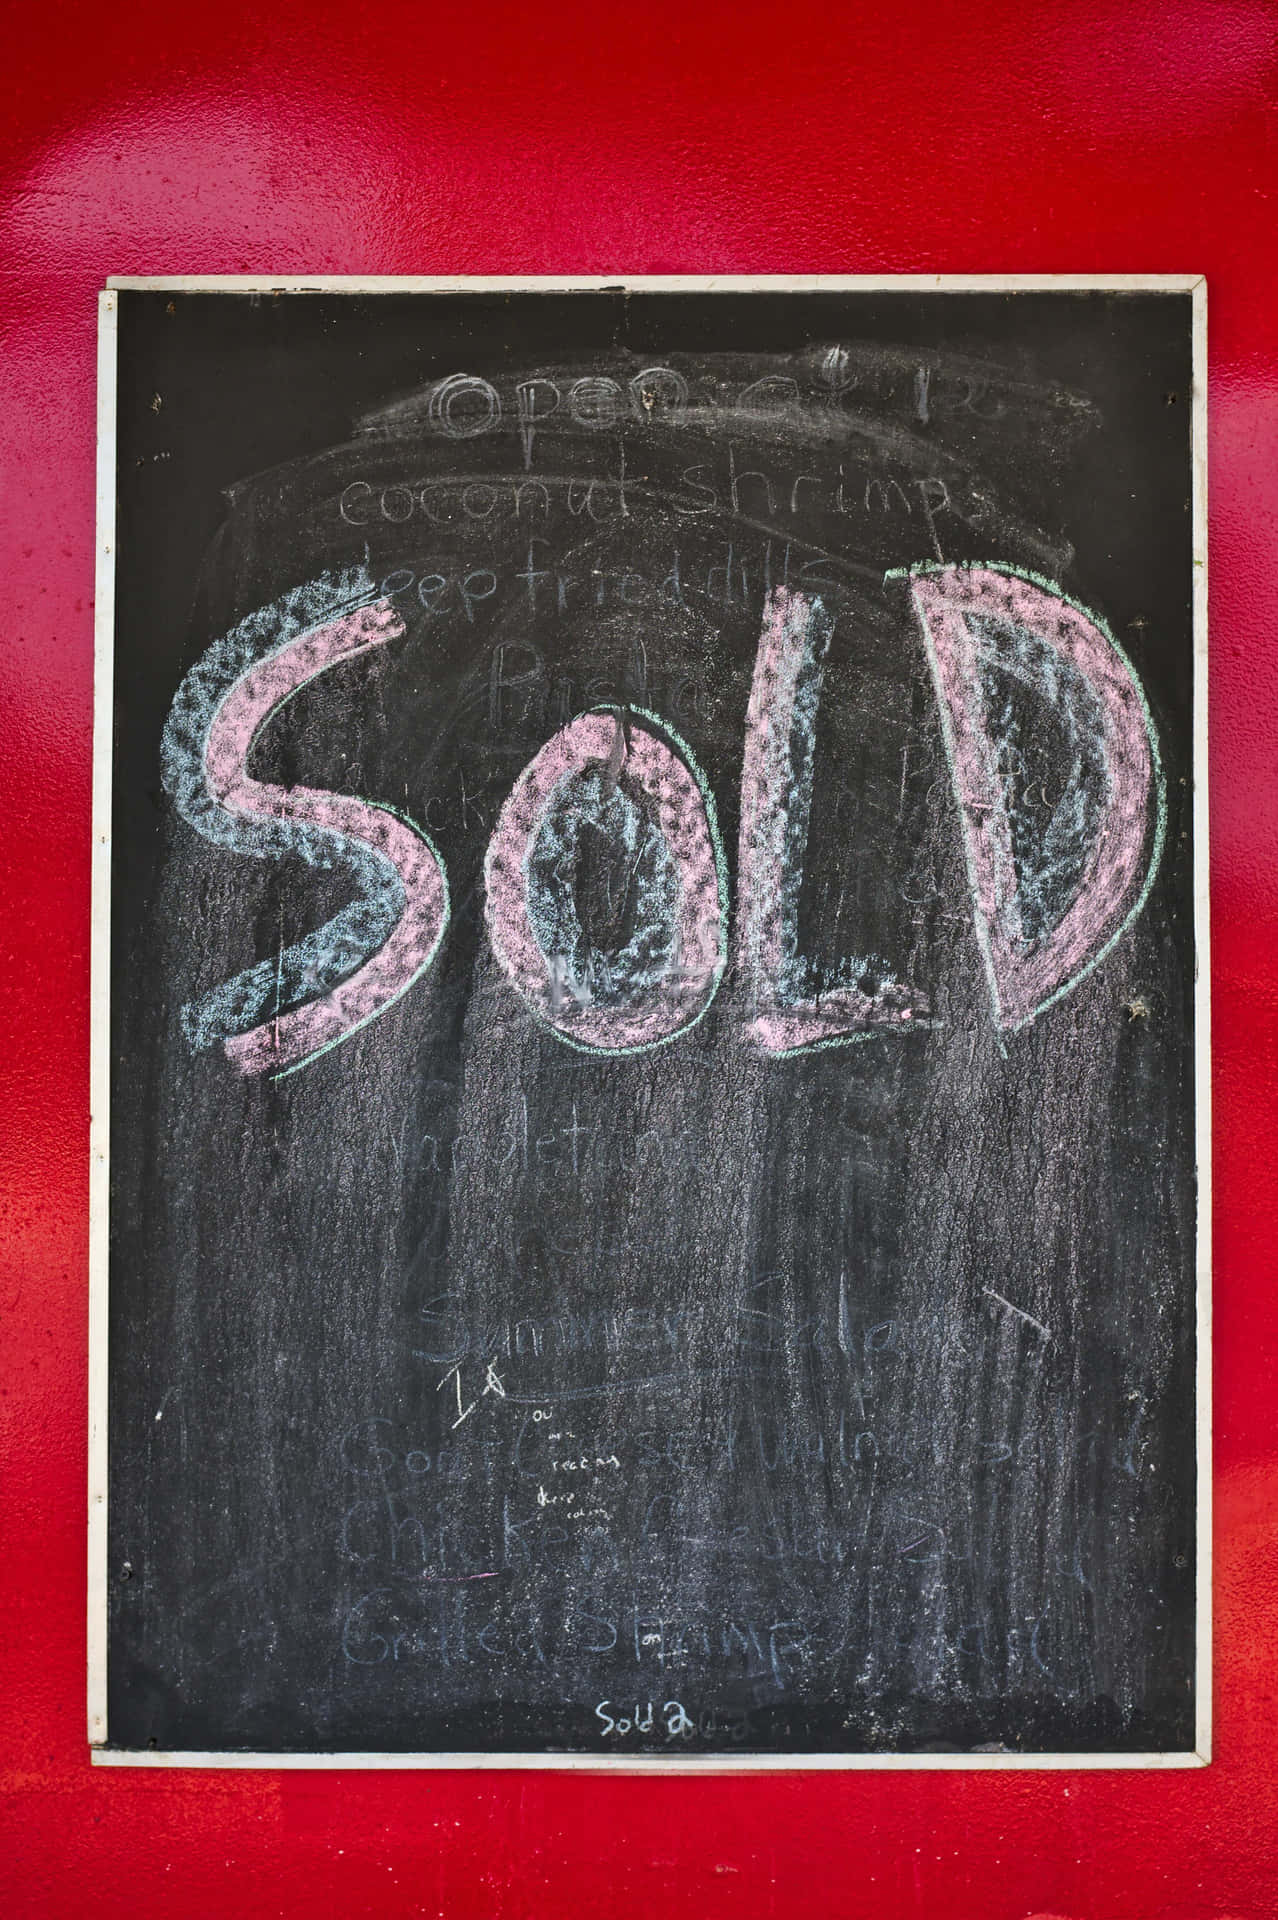 Sold Sign On A Blackboard